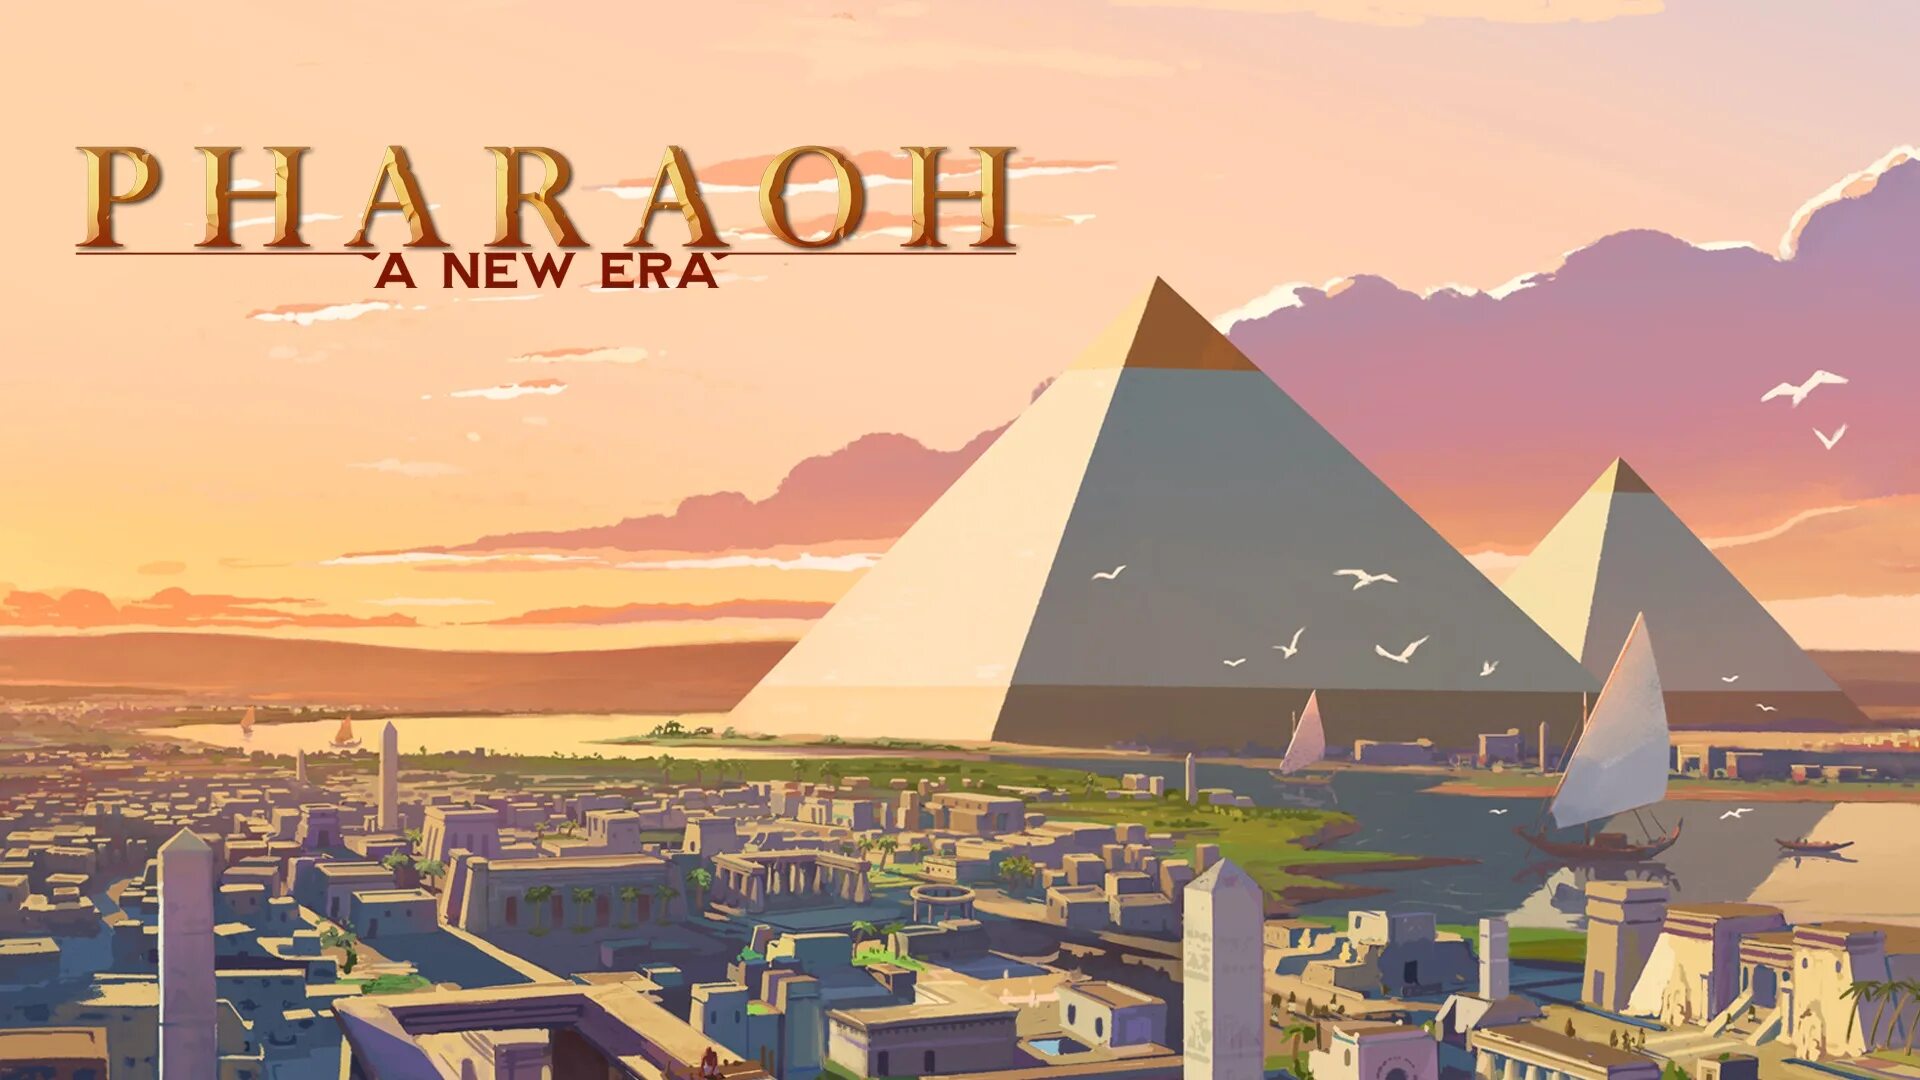 Фараон и Клеопатра игра 2021. Pharaon и Pharaon New era. Pharaoh: a New era игра. Pharaoh a New era 2021. Город новой эры